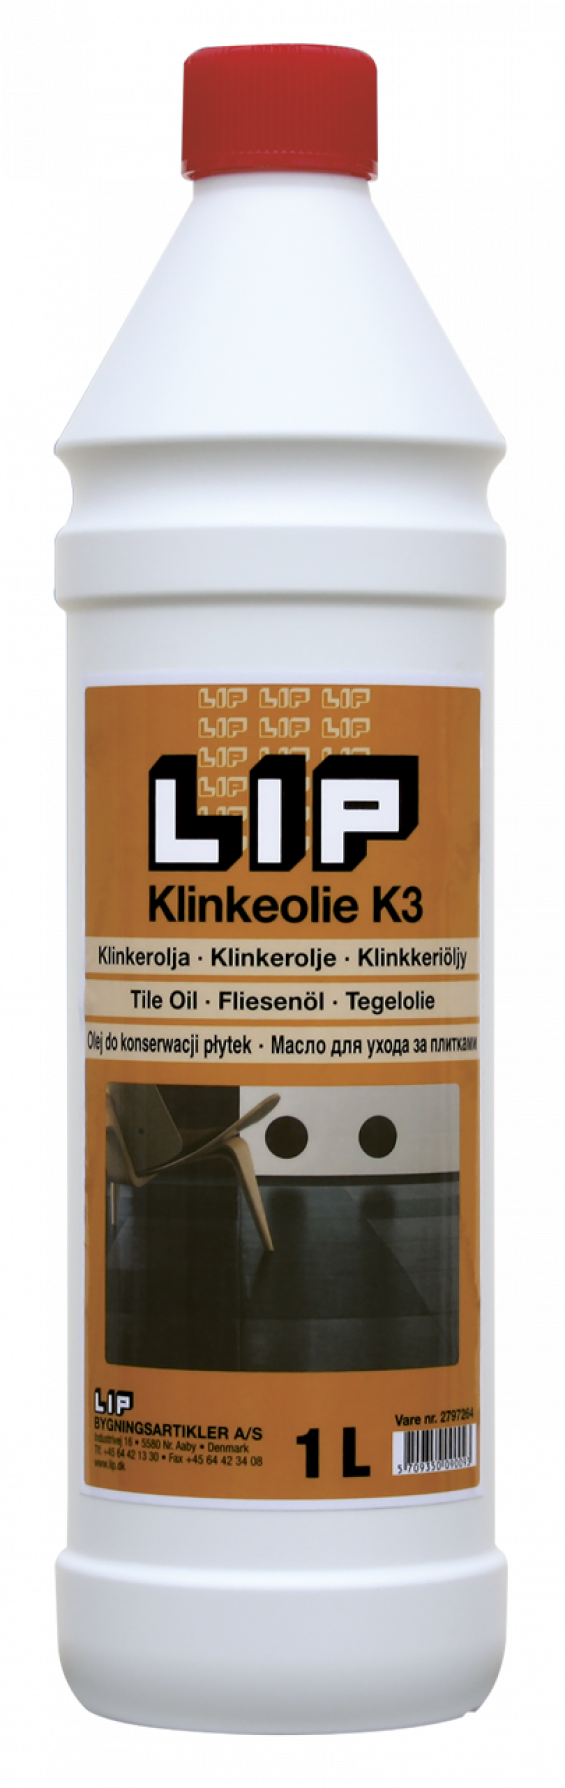 LIP Klinkeolie K3 1,0 ltr